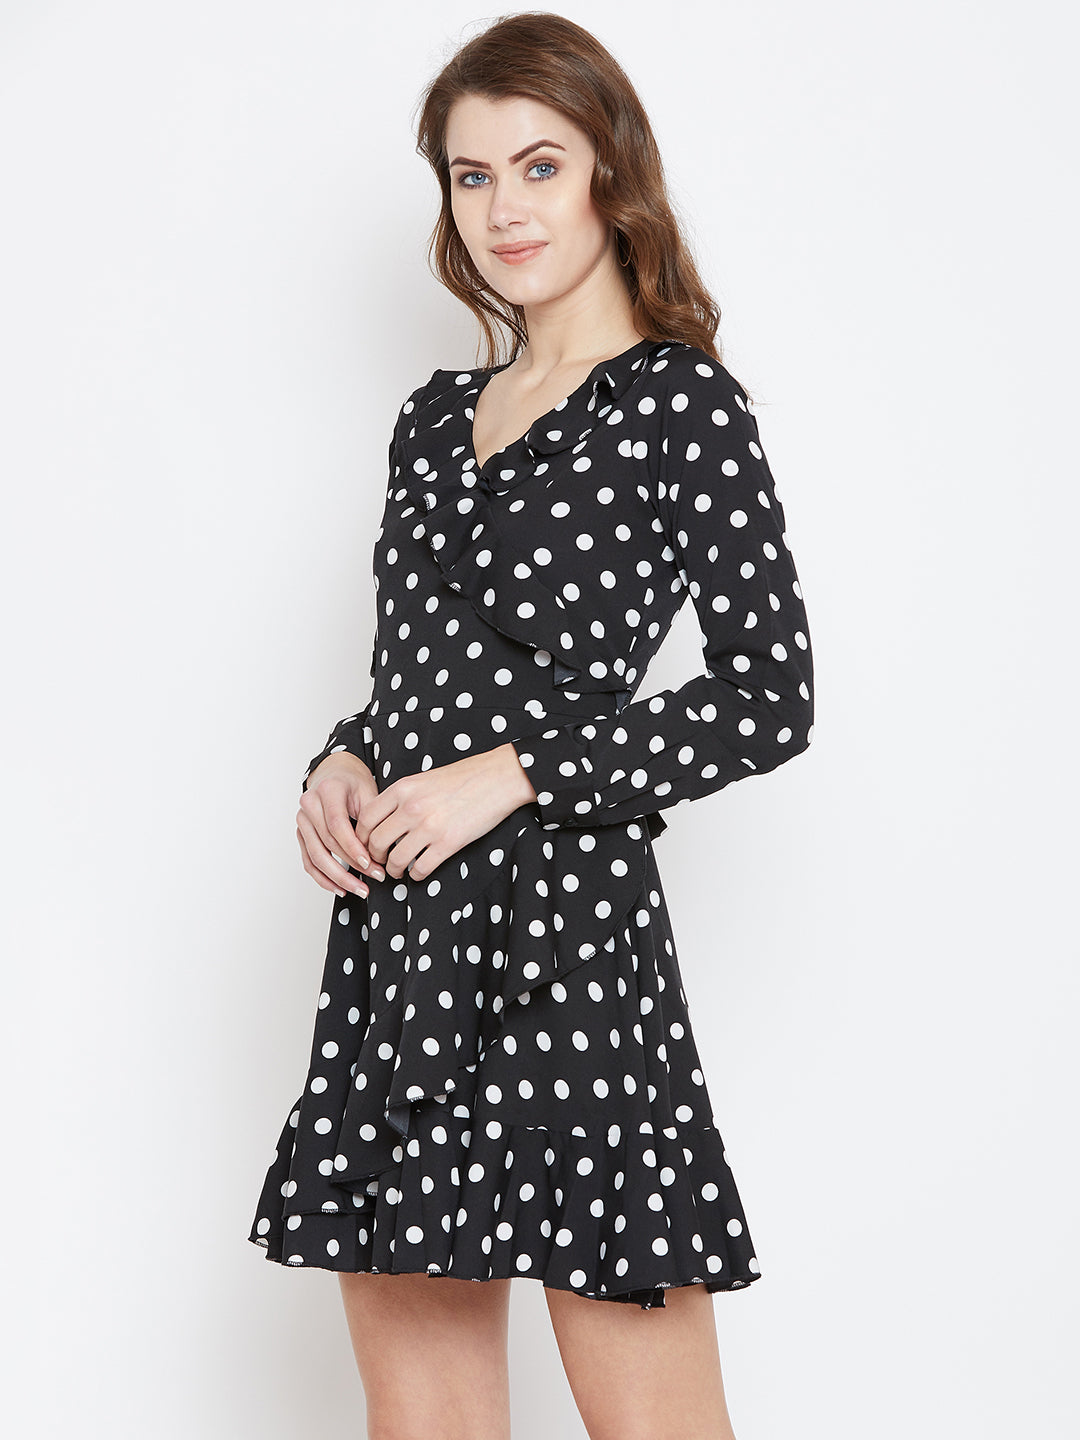 Black Polka Dot Mini Dress - Berrylush